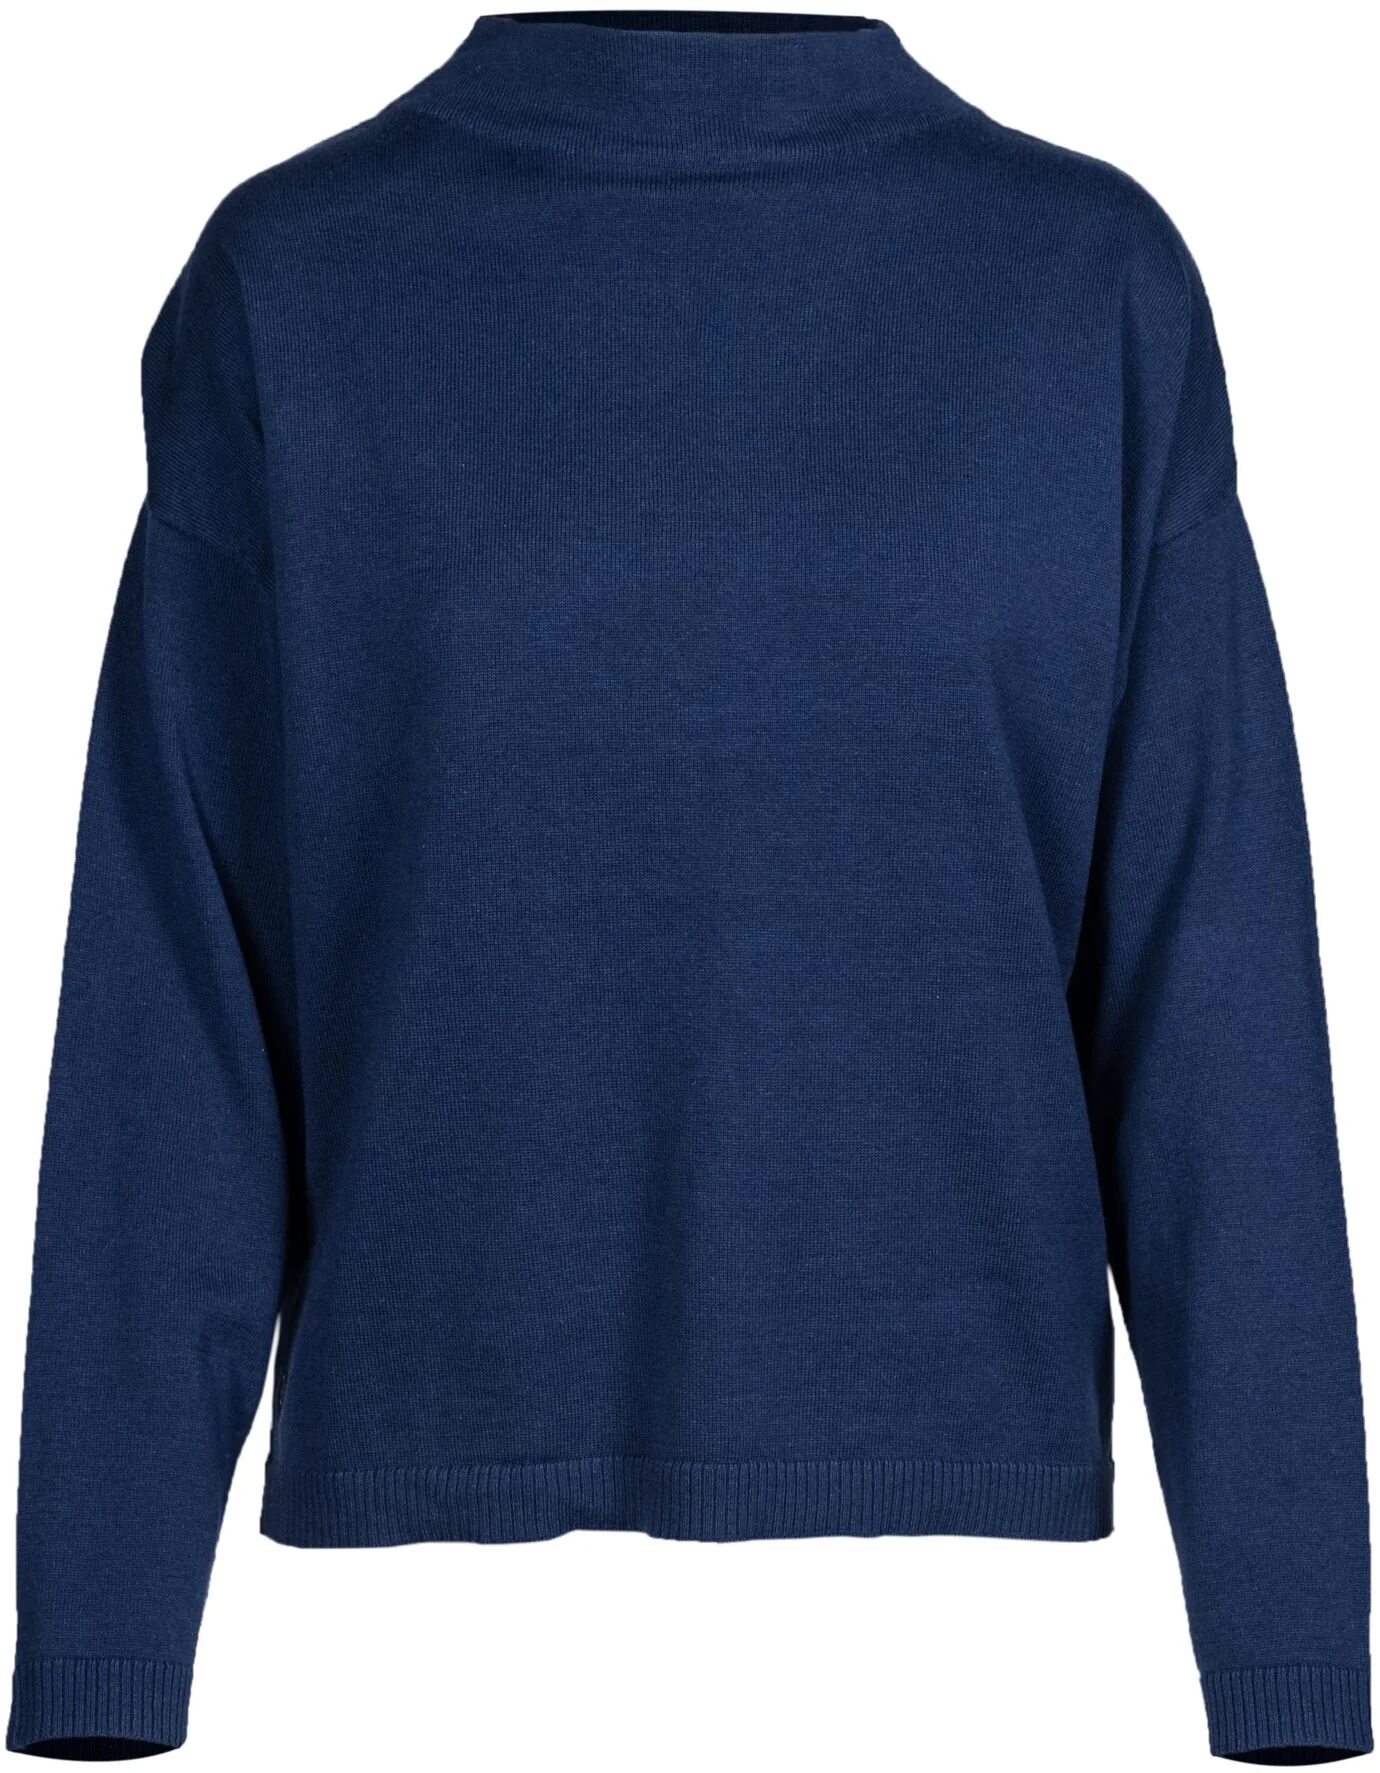 Levelwear Verve Womens Poise Golf Sweater - Blue, Size: Large